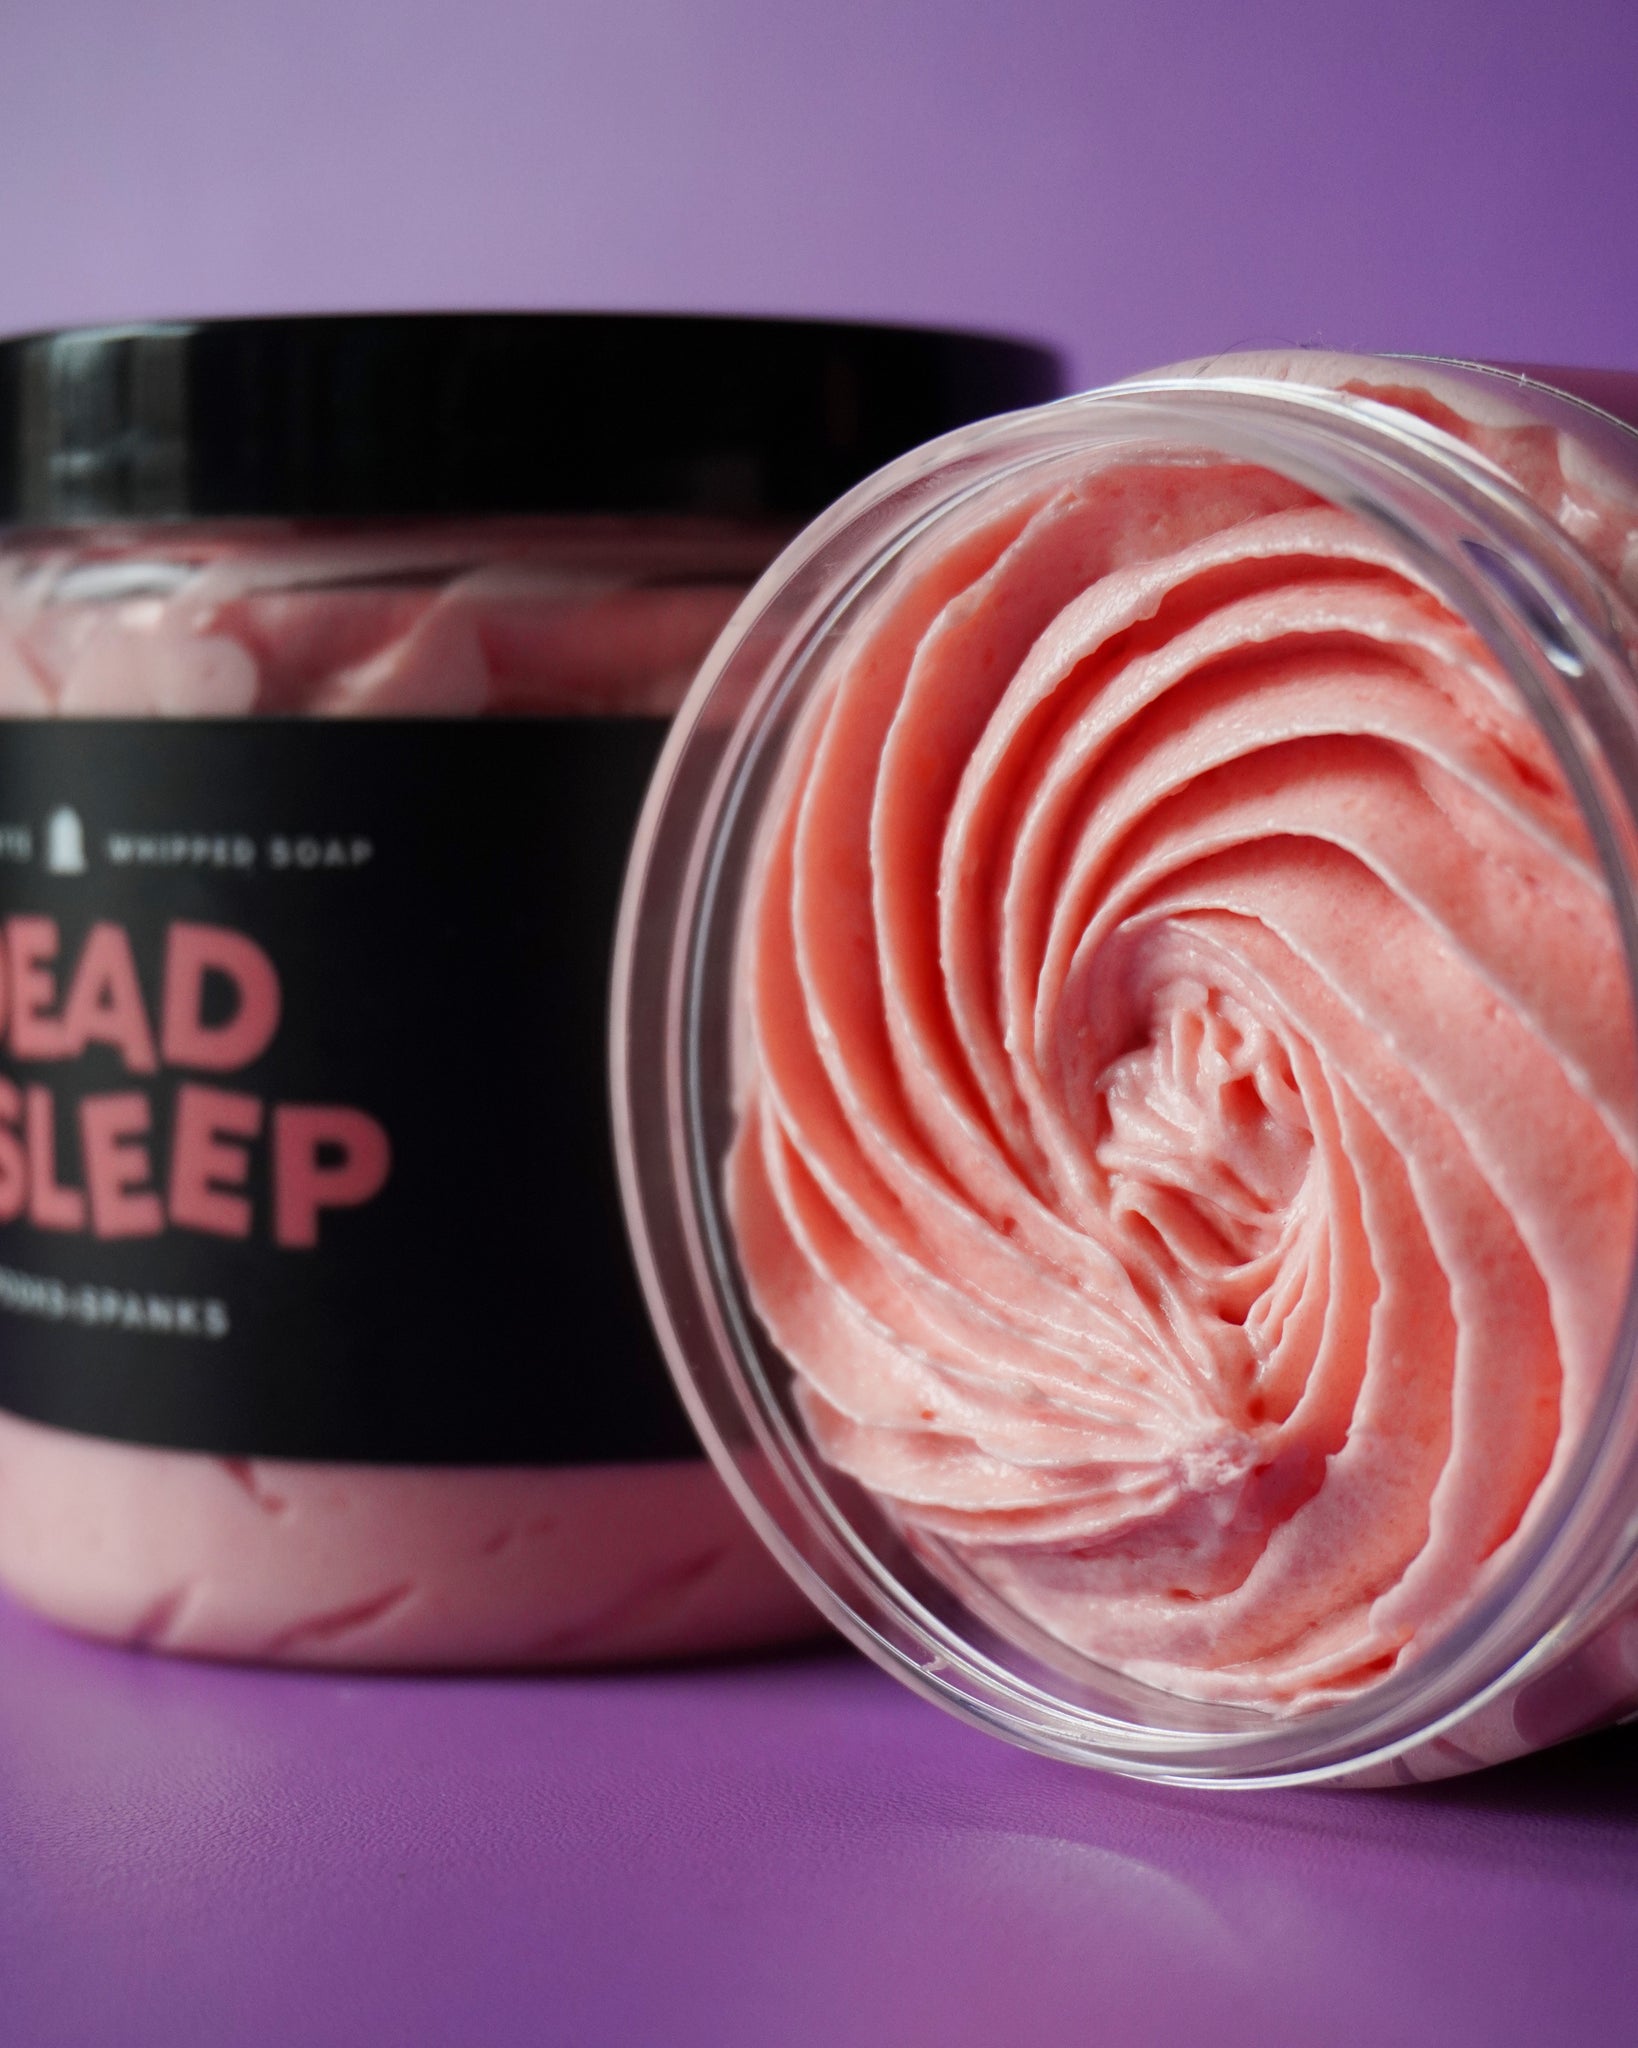 Dead Asleep Whipped Soap - Spruce + Empress peach